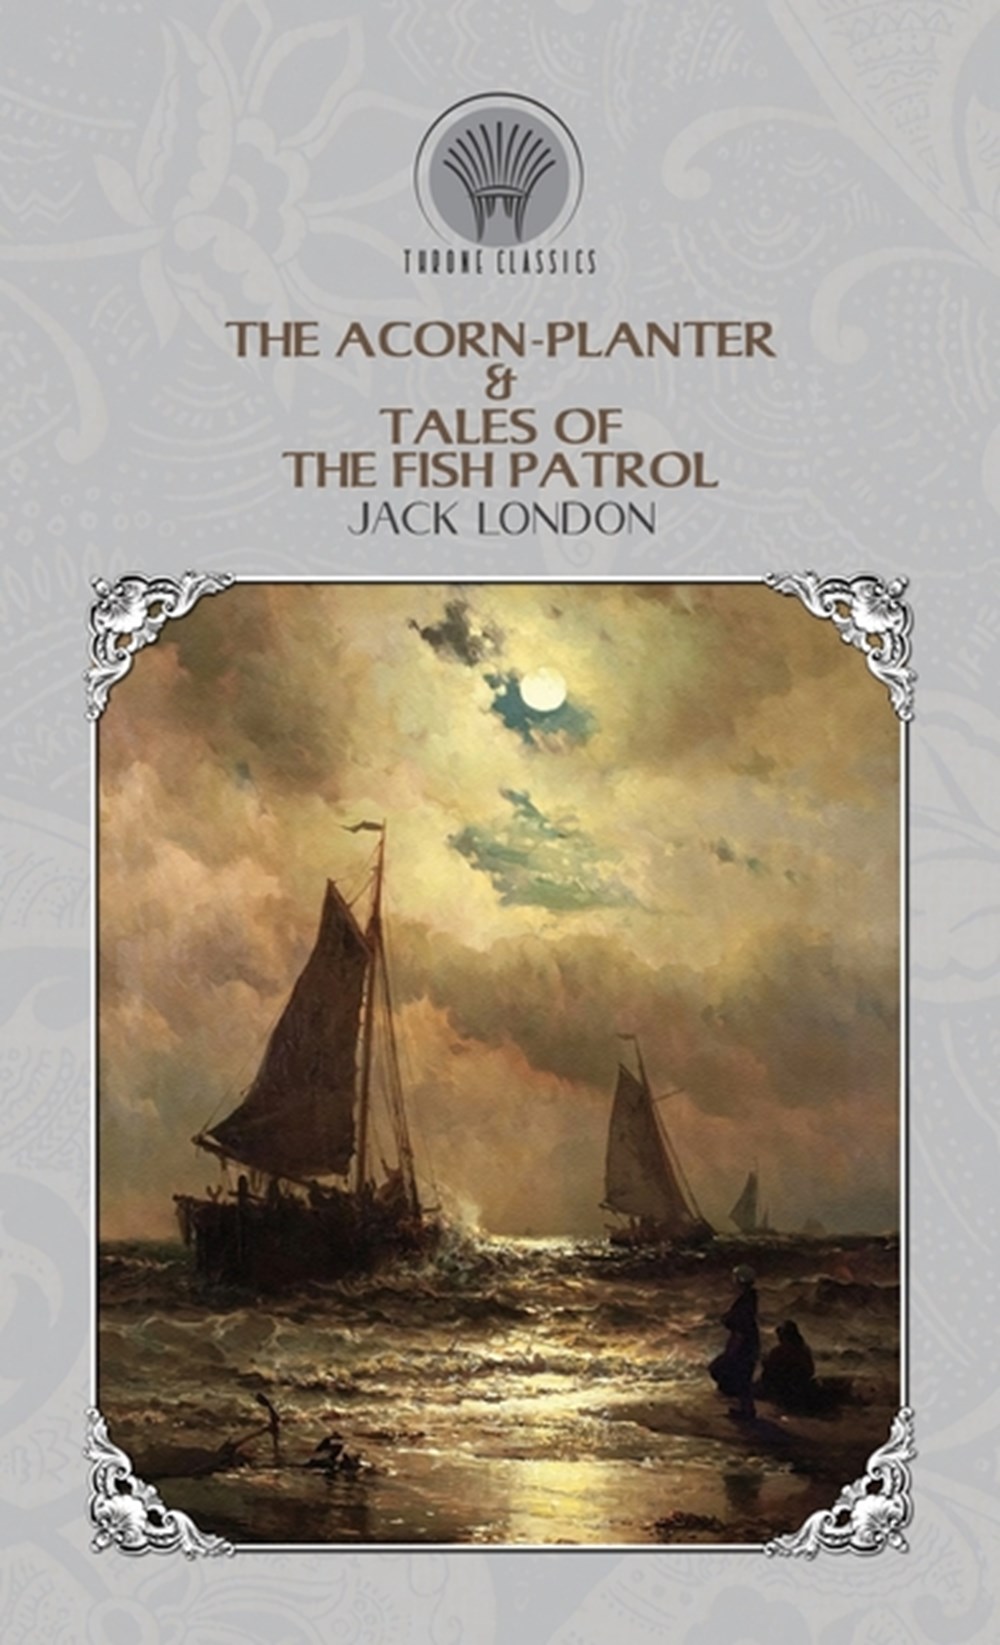 Acorn-Planter & Tales of the Fish Patrol